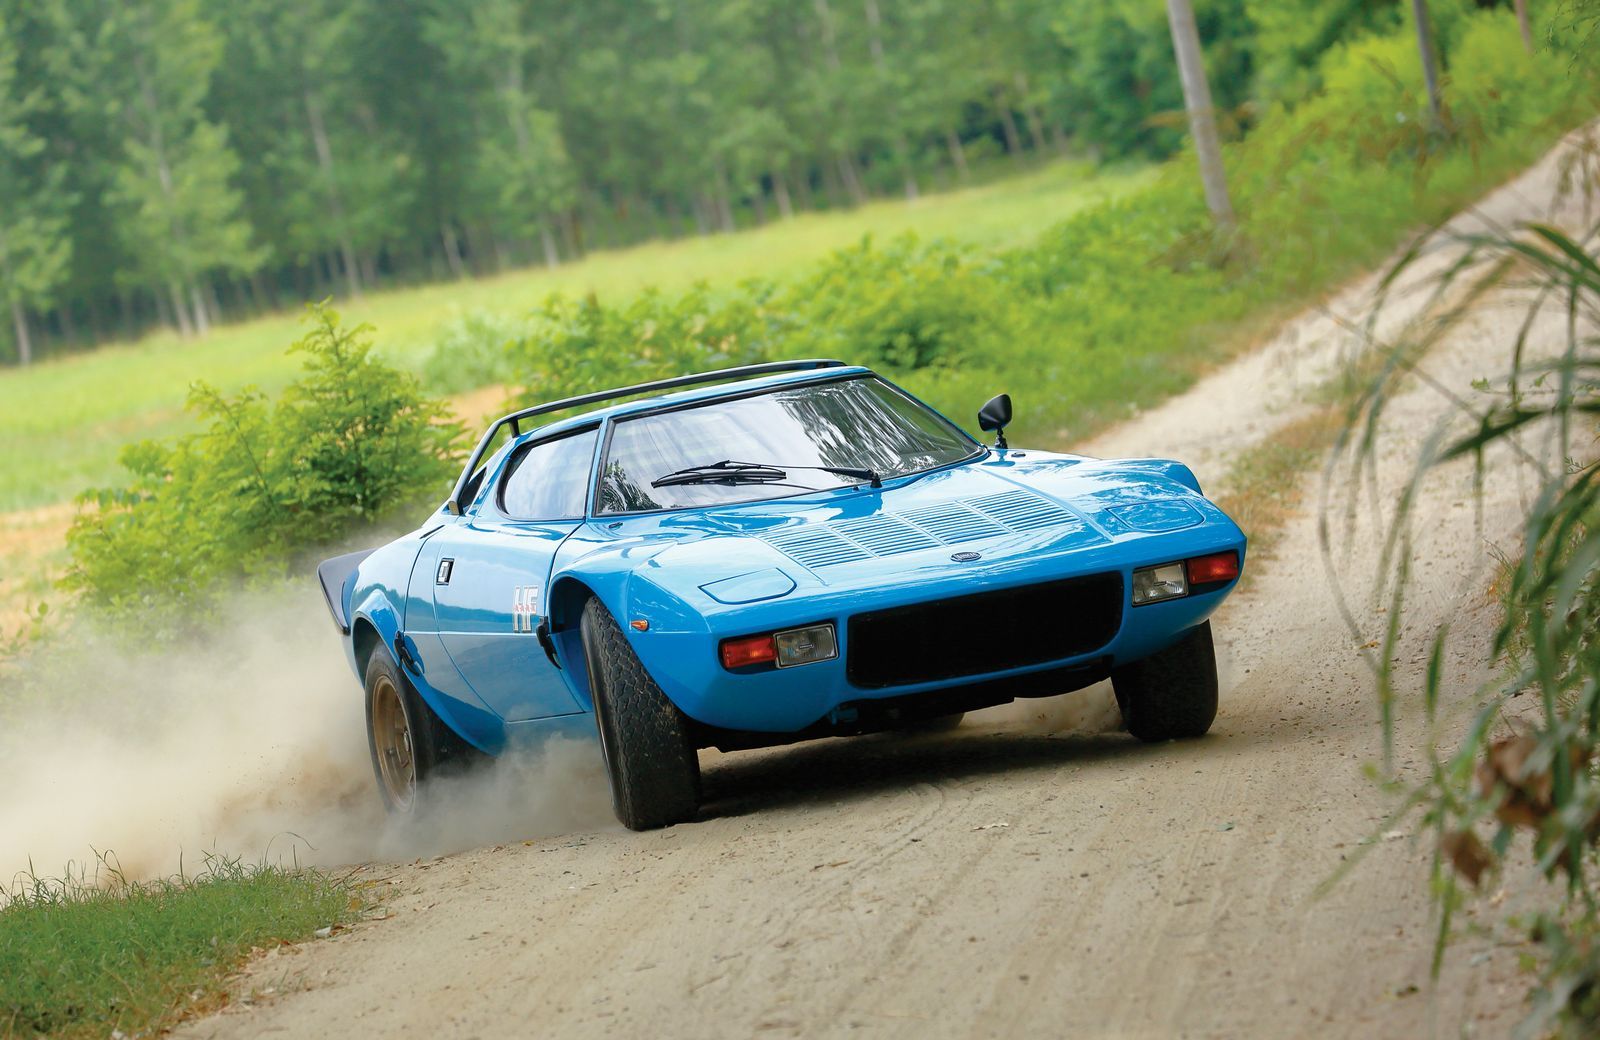 Lancia Stratos on dirt road